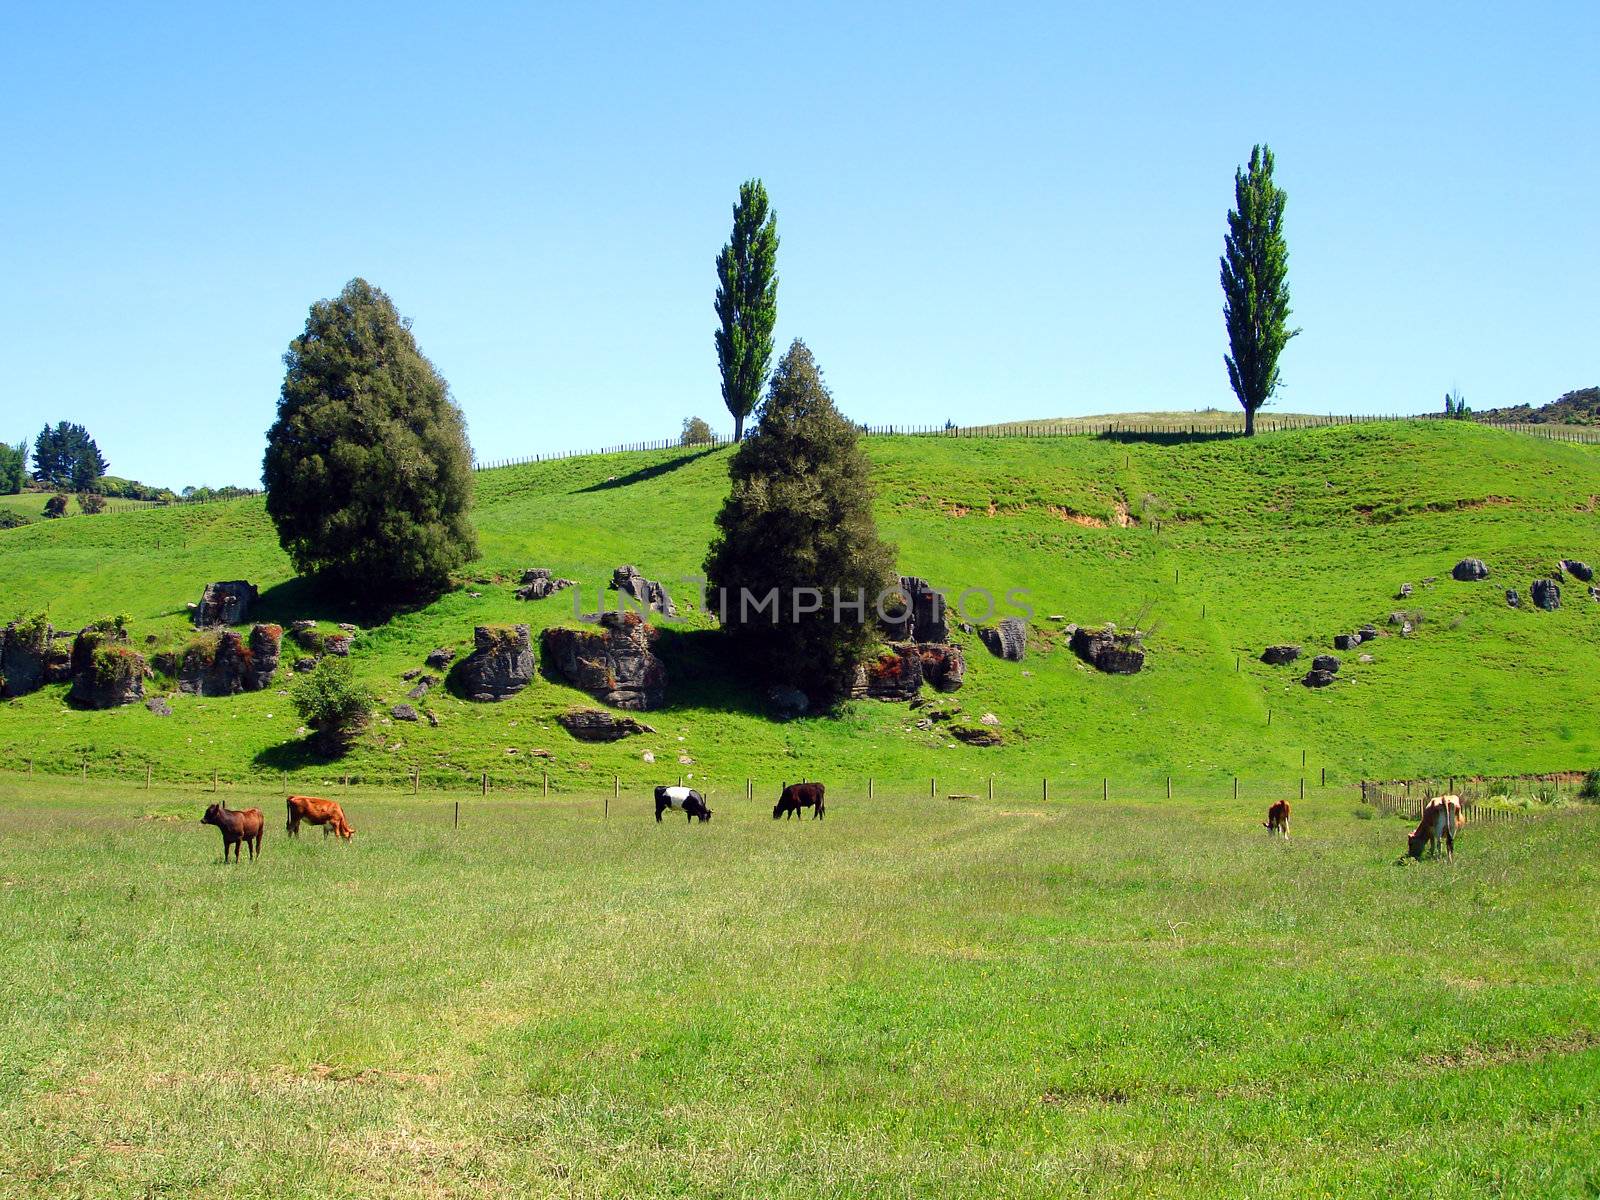 Field of Cows, Waitomo, New Zealand